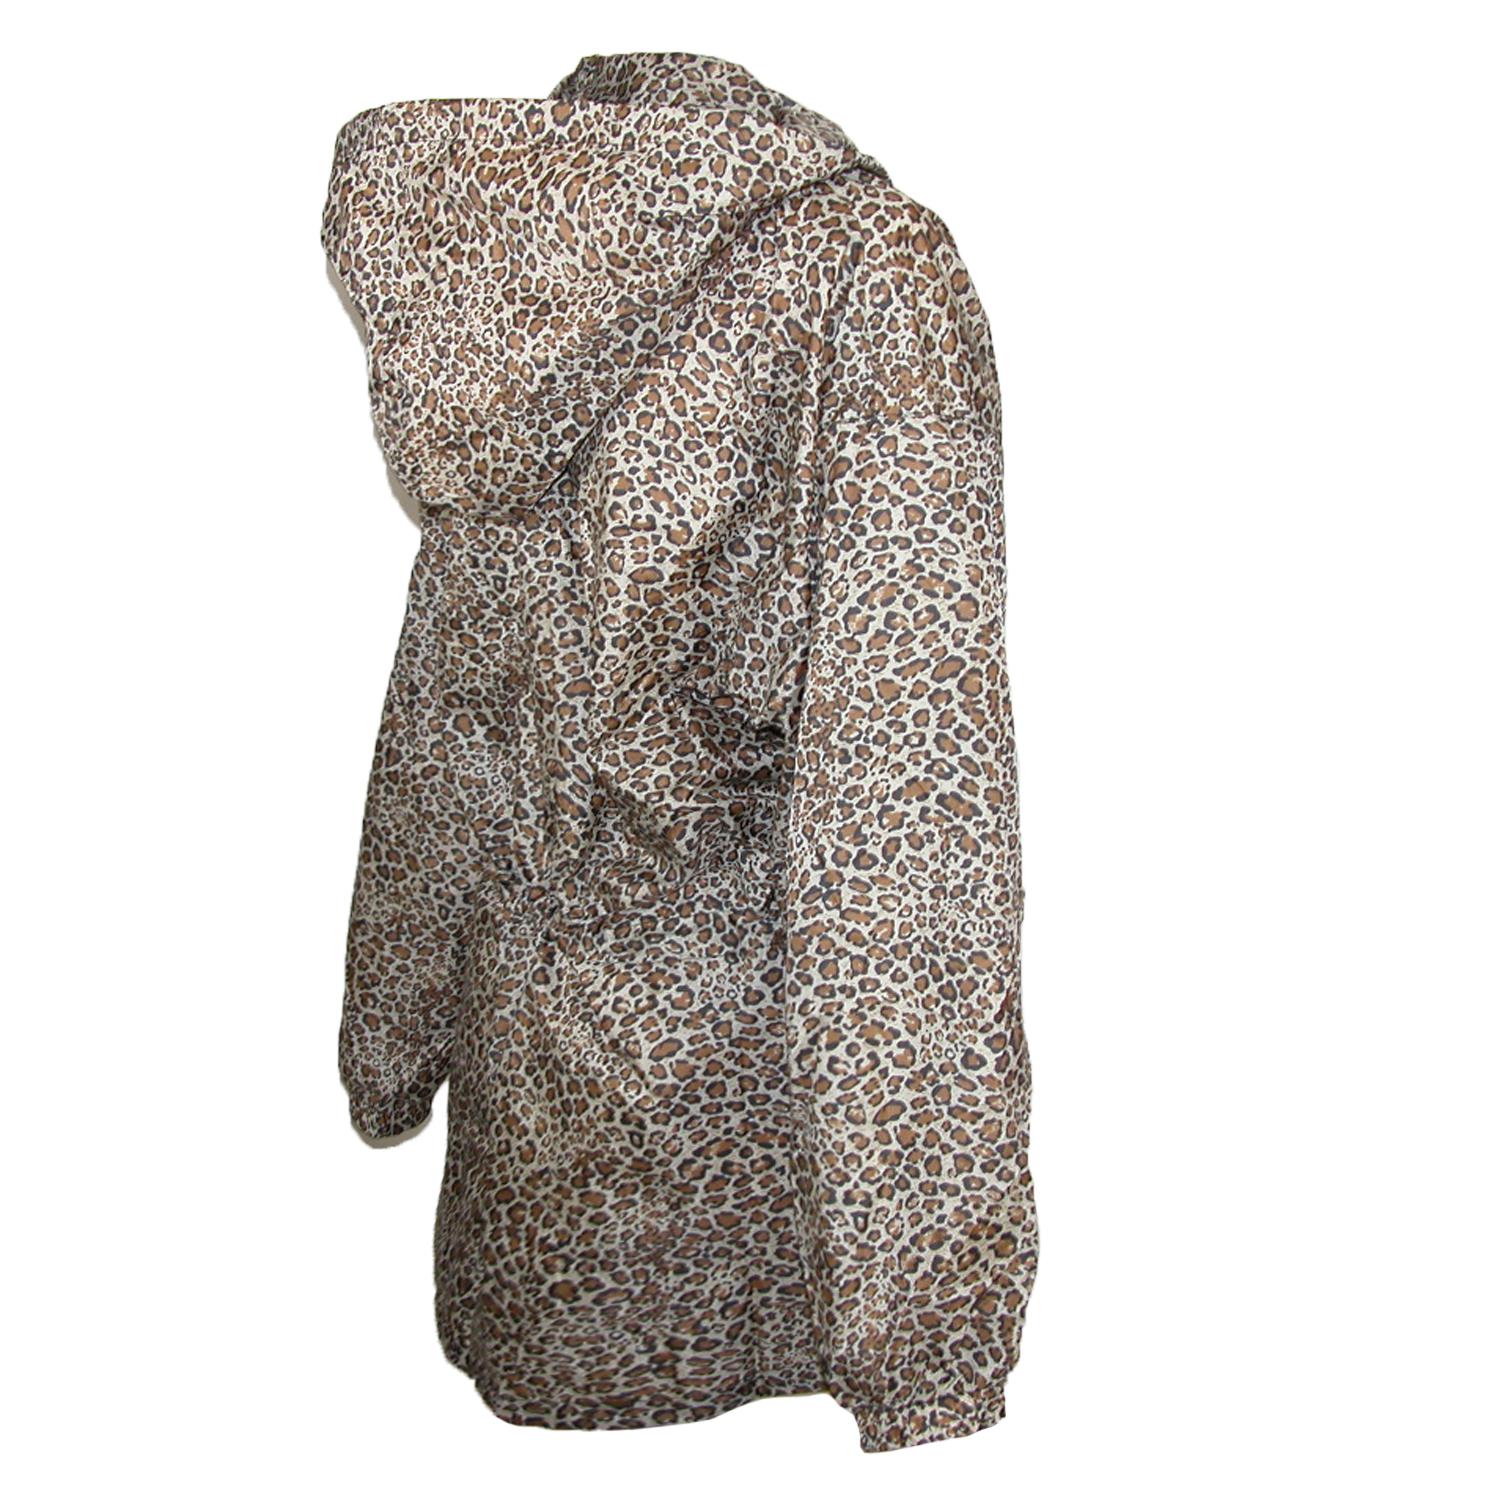 ShedRain Women's Packable Fashion Leopard Print Anorak Rain Jacket